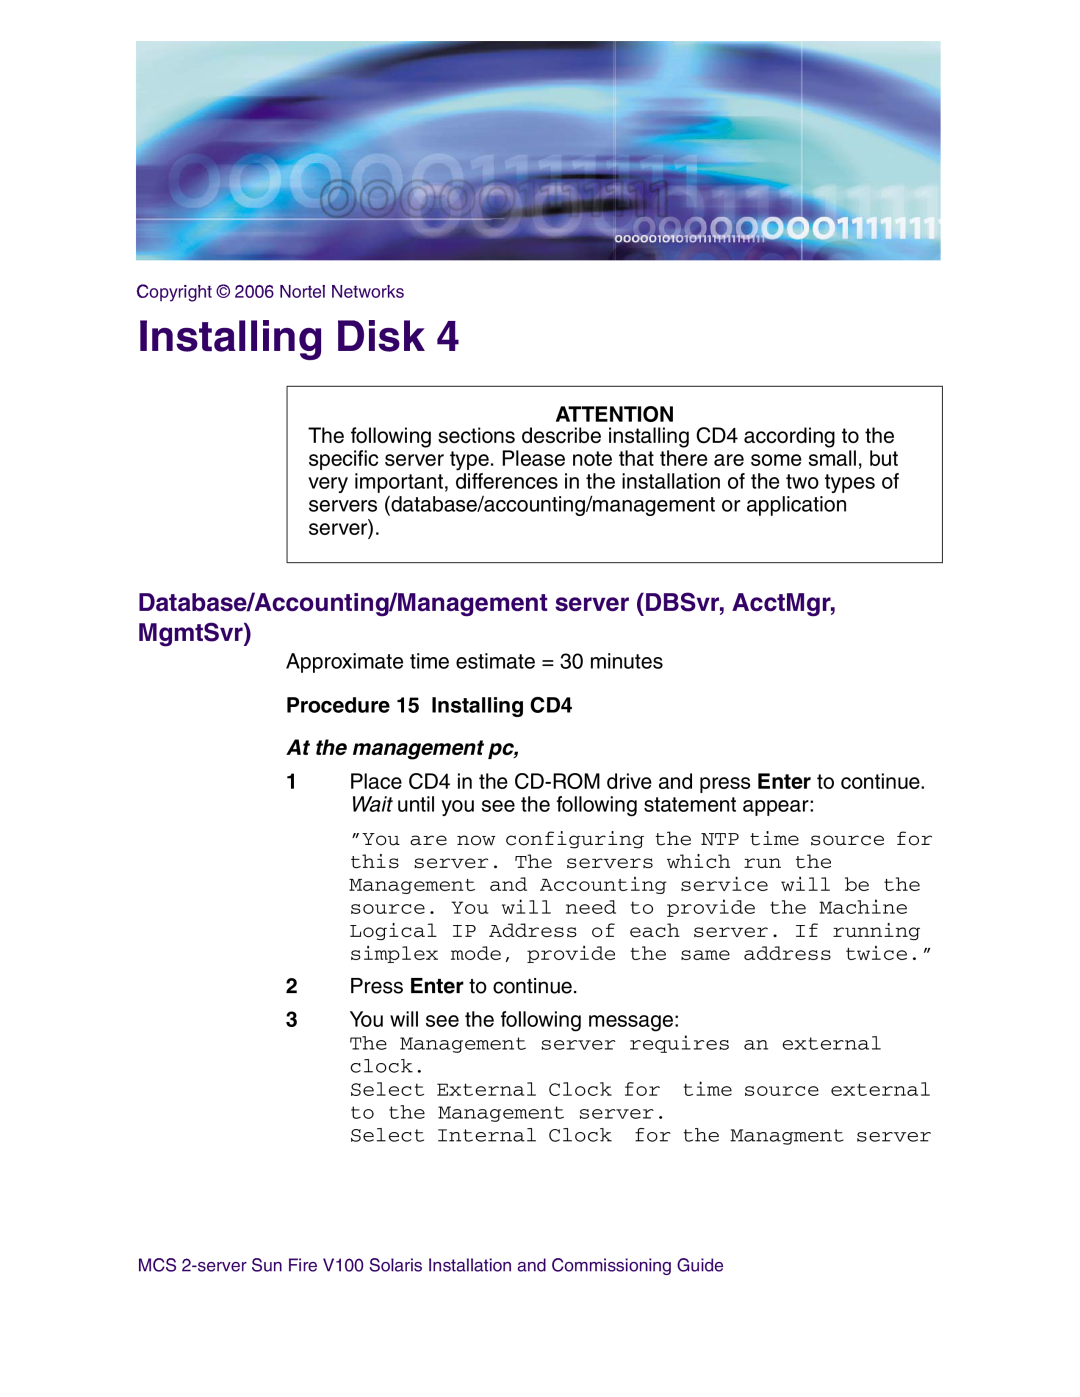 Nortel Networks V100 Installing Disk, Database/Accounting/Management server DBSvr, AcctMgr, MgmtSvr, At the management pc 